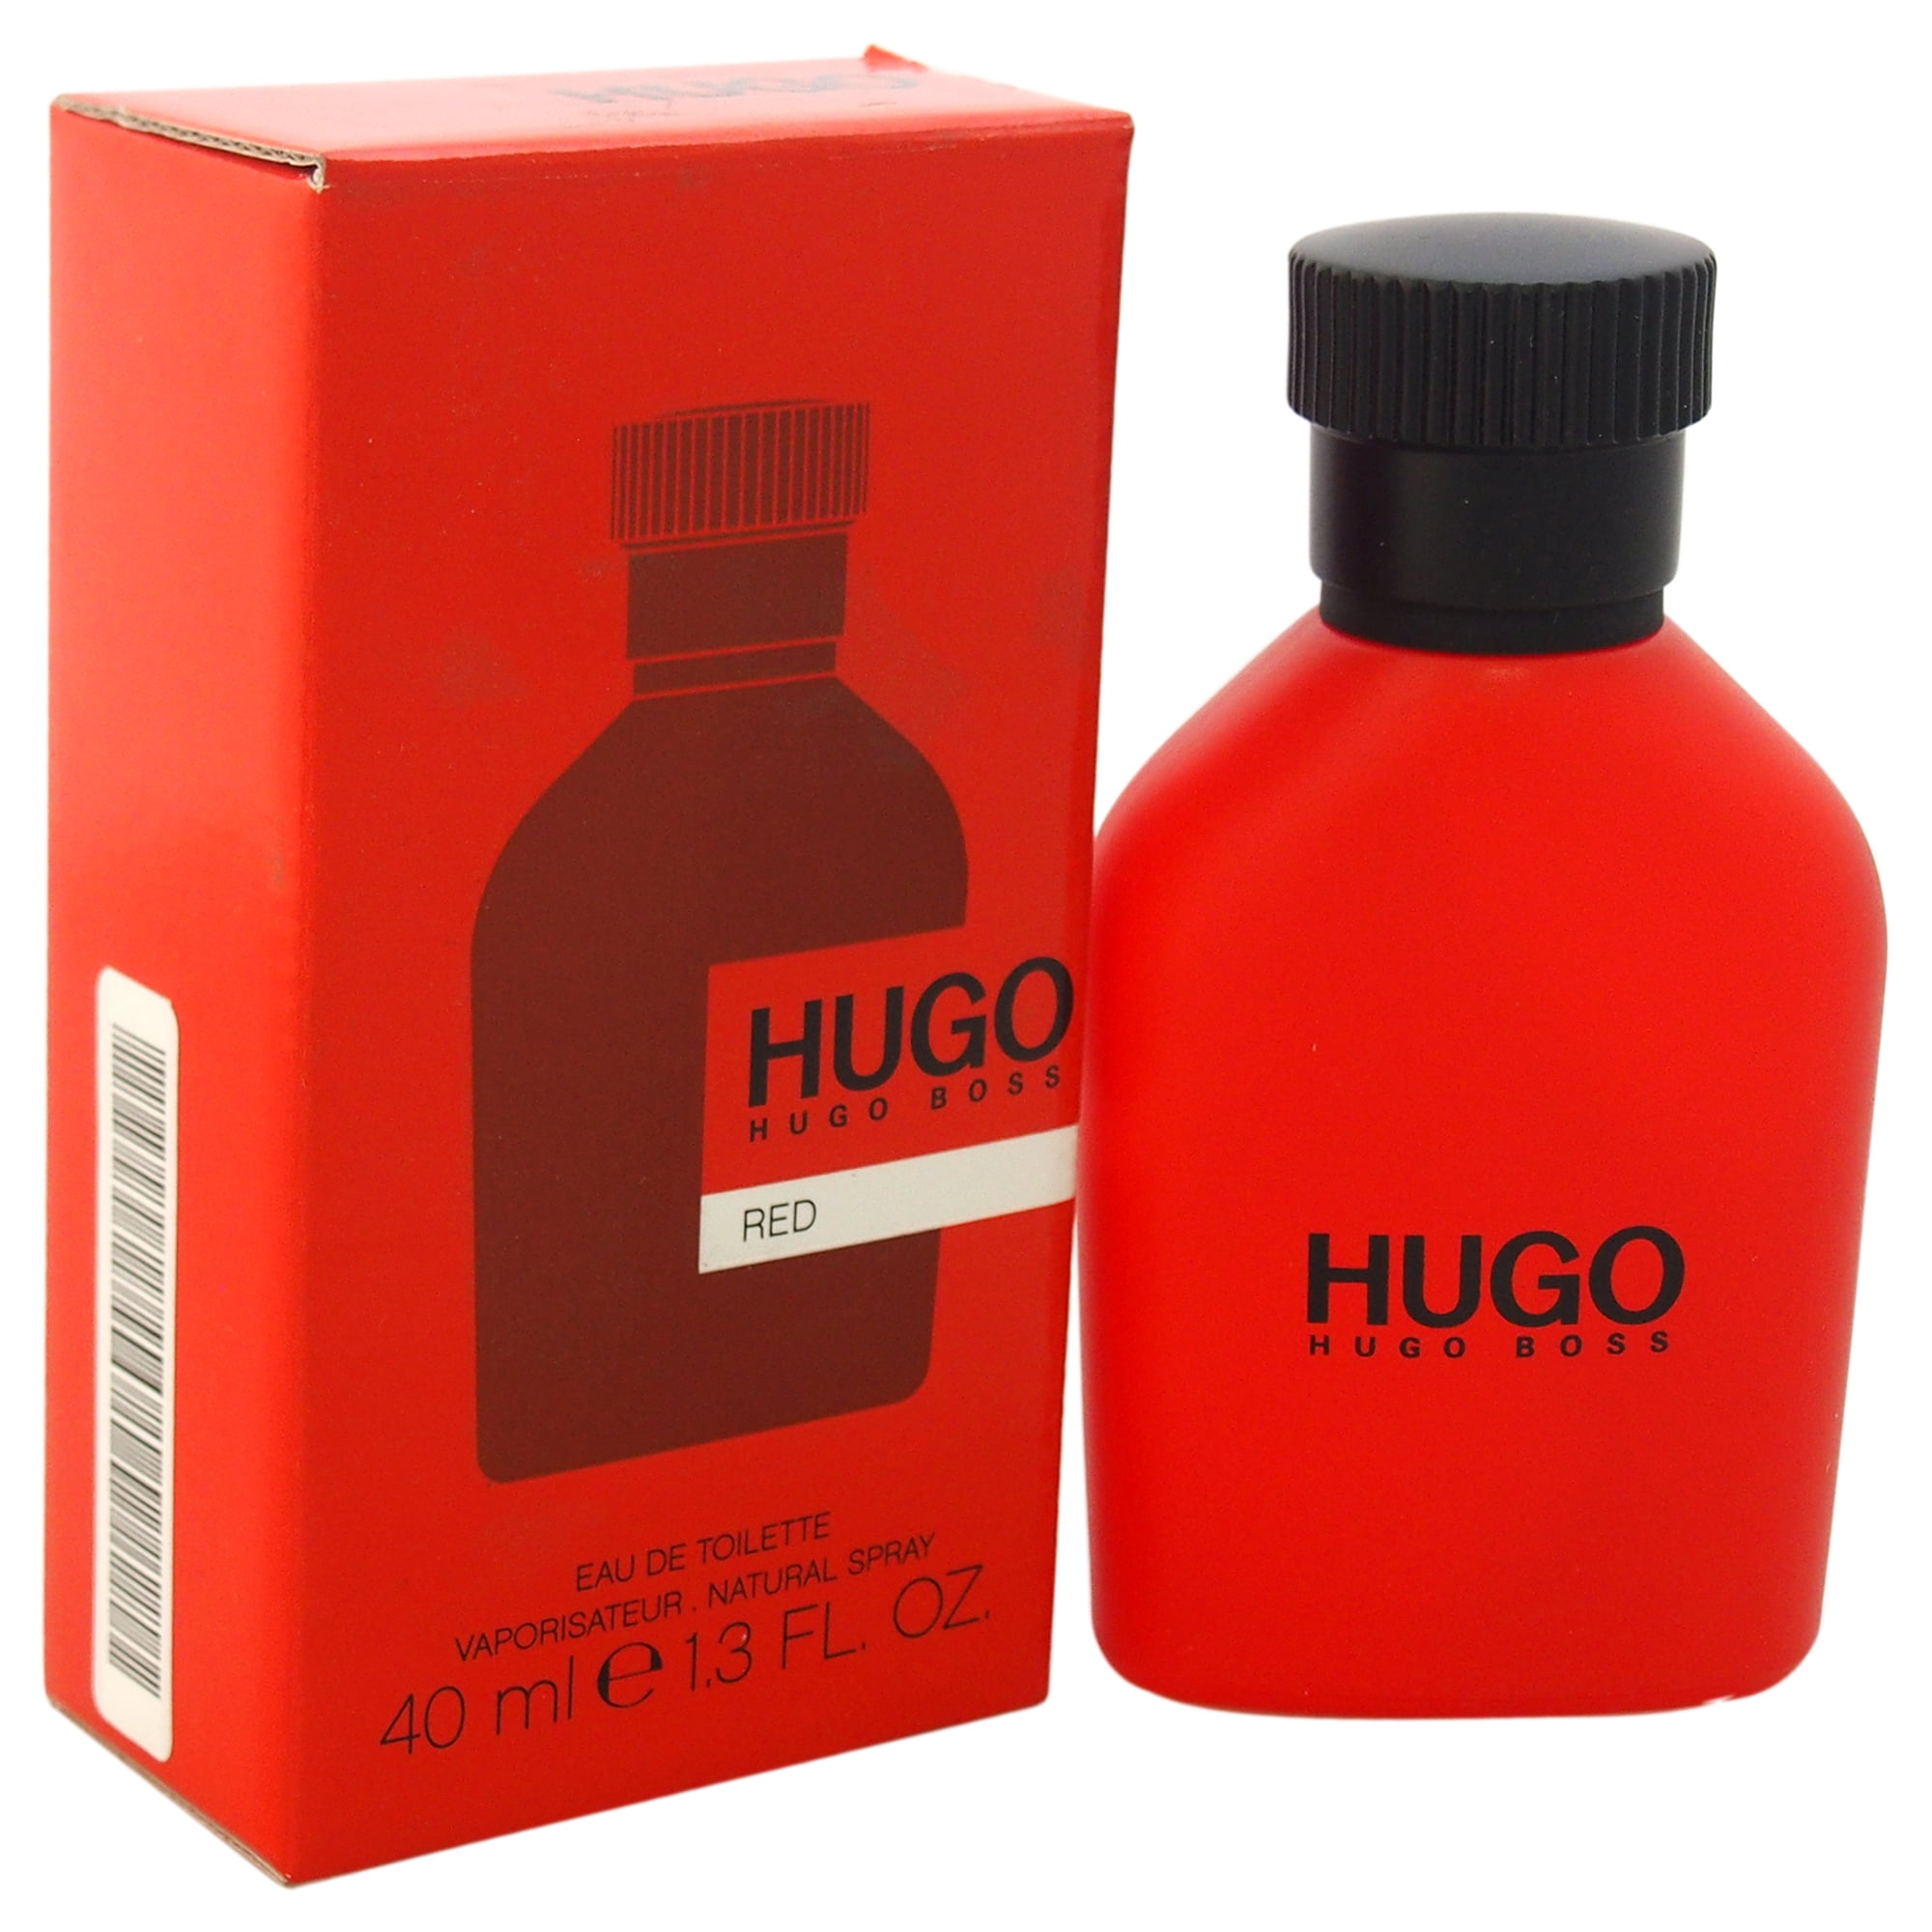 Hugo Red by Hugo Boss for Men - 1.3 oz EDT Spray | Walmart Canada